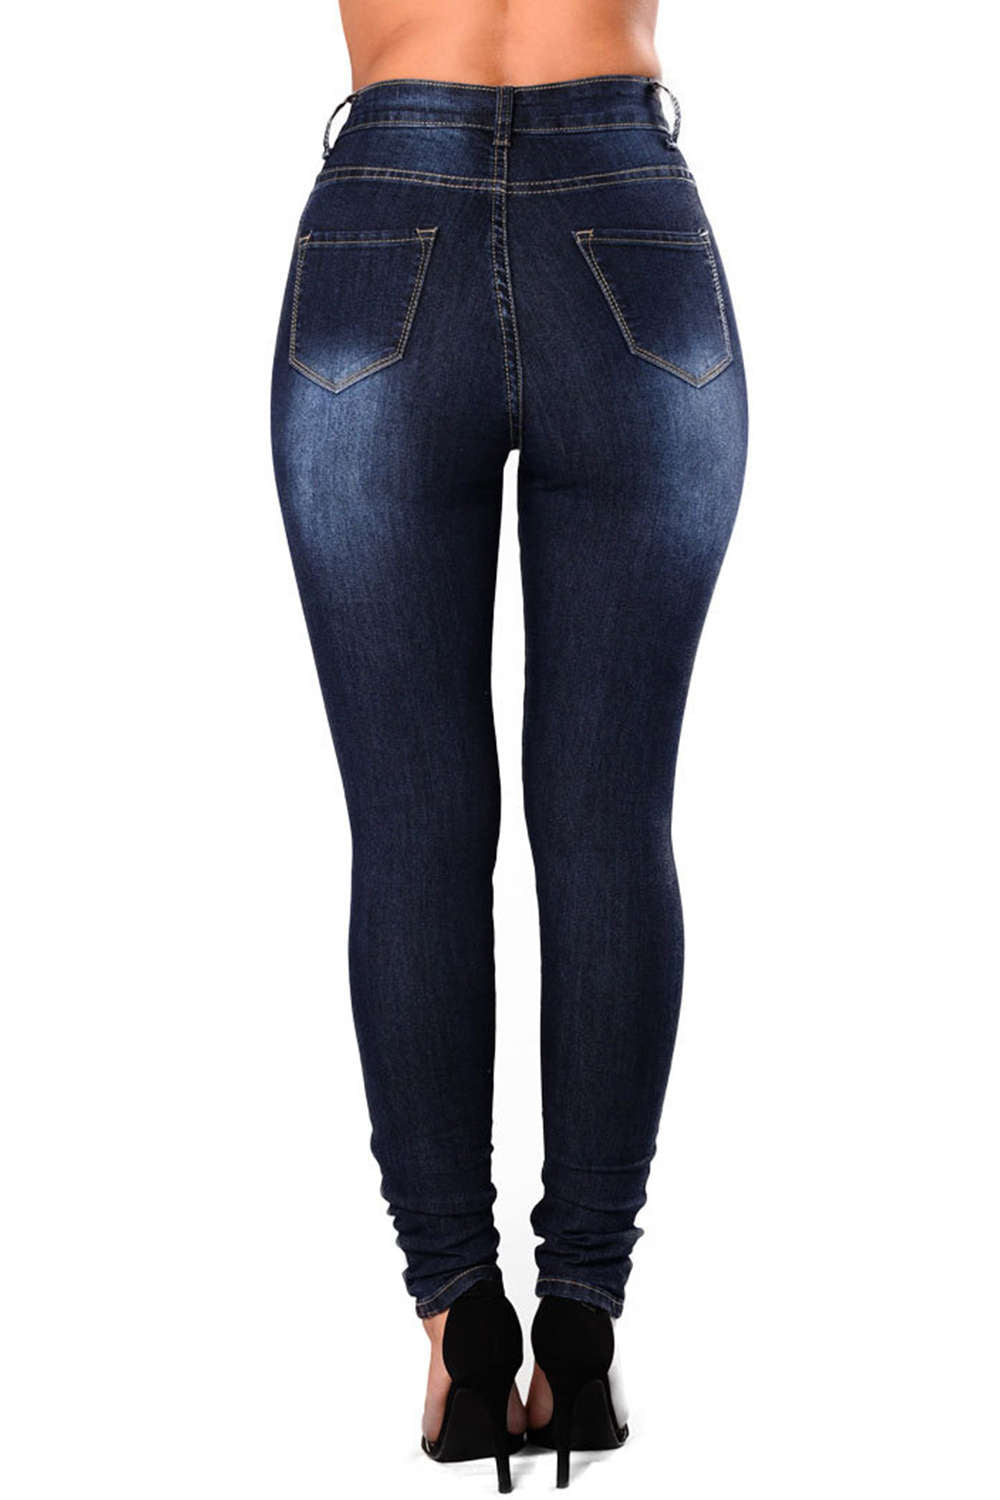 Iyasson Women's Ripped Slim Long Jeans Pants